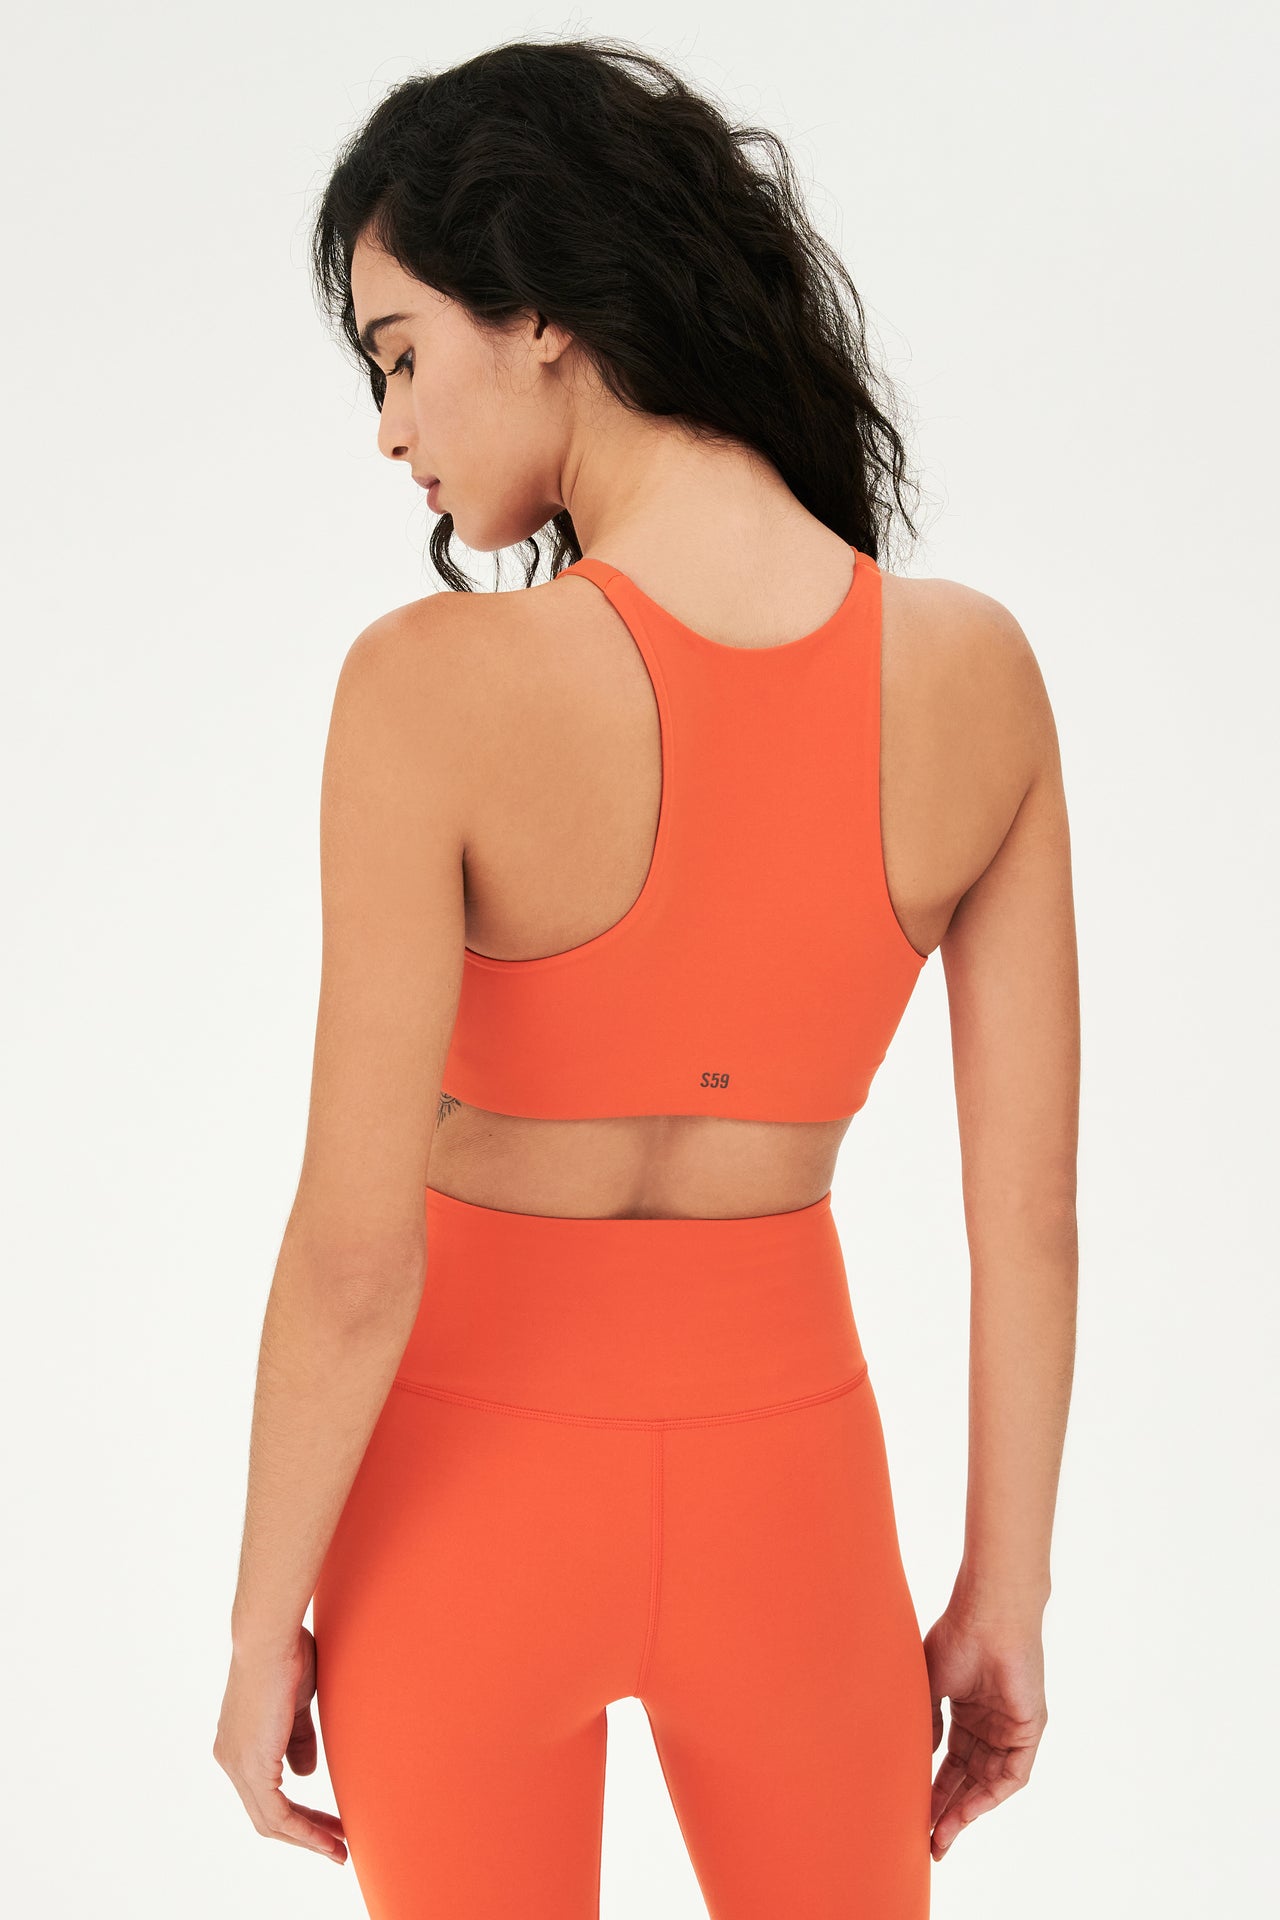 Back view of girl wearing orange sports bra that stops at collarbone and orange leggings